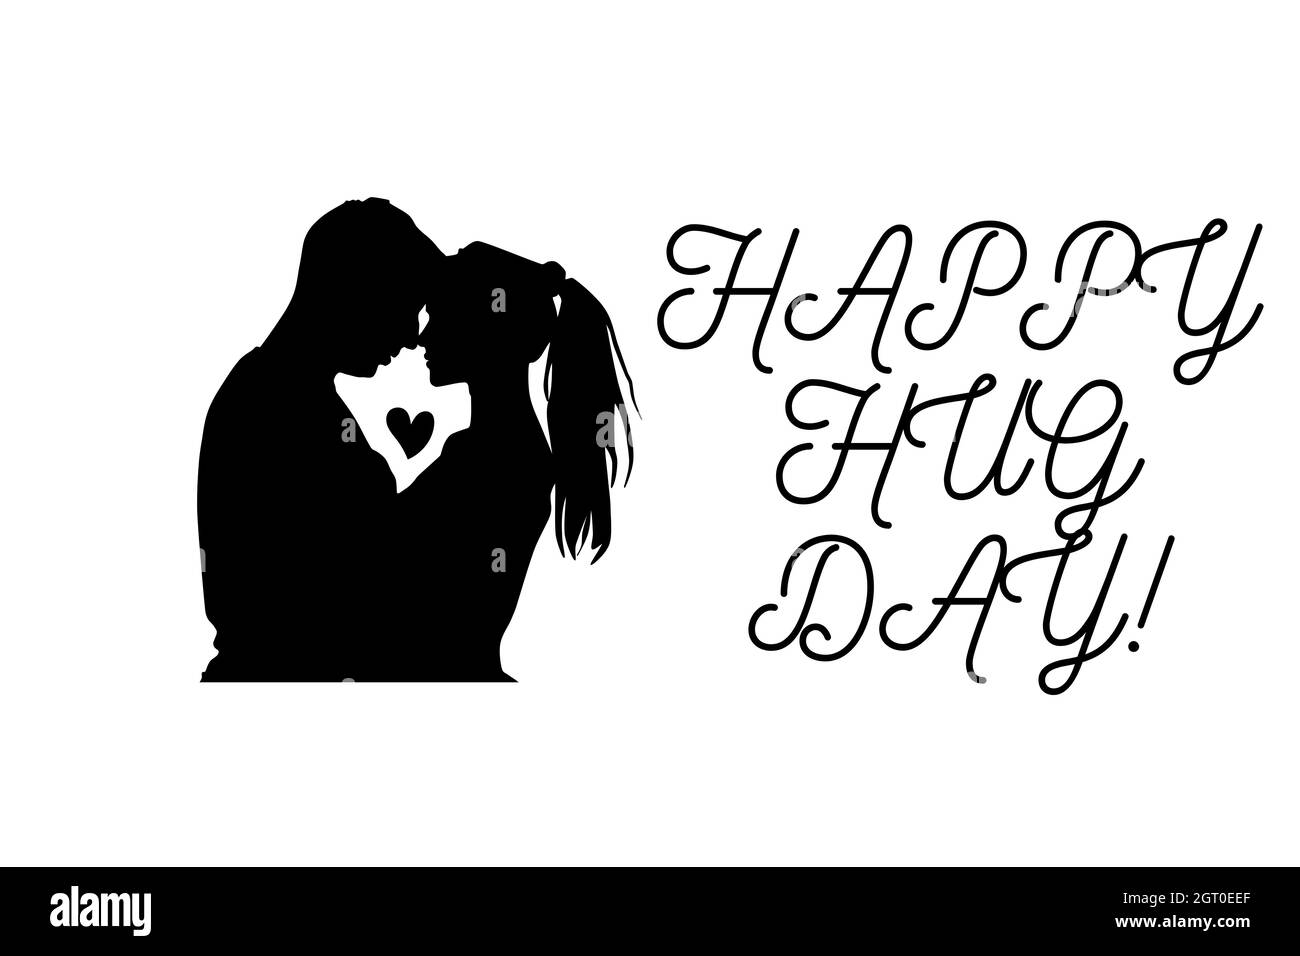 Happy Hug Day Graphic Design With White Background Stock Photo - Alamy